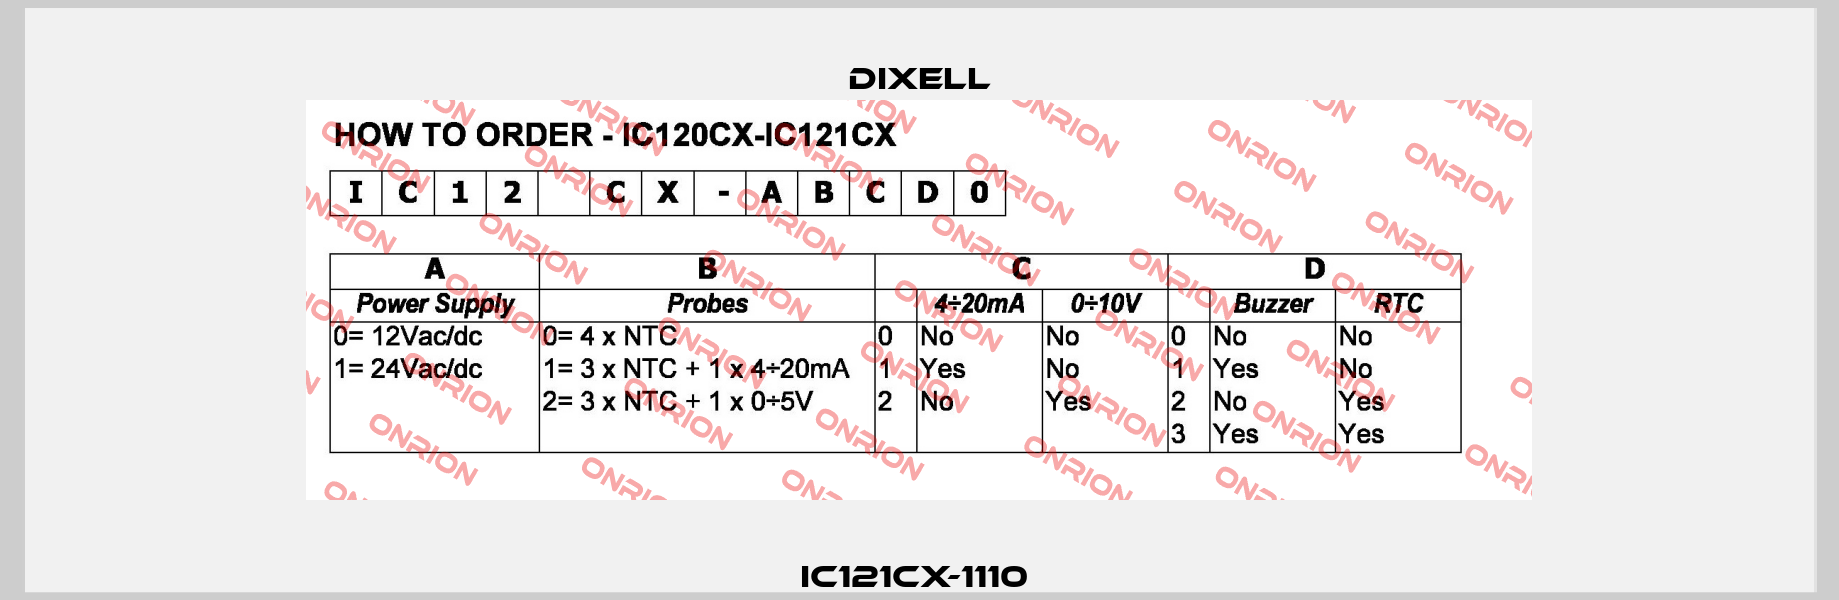 IC121CX-1110  Dixell